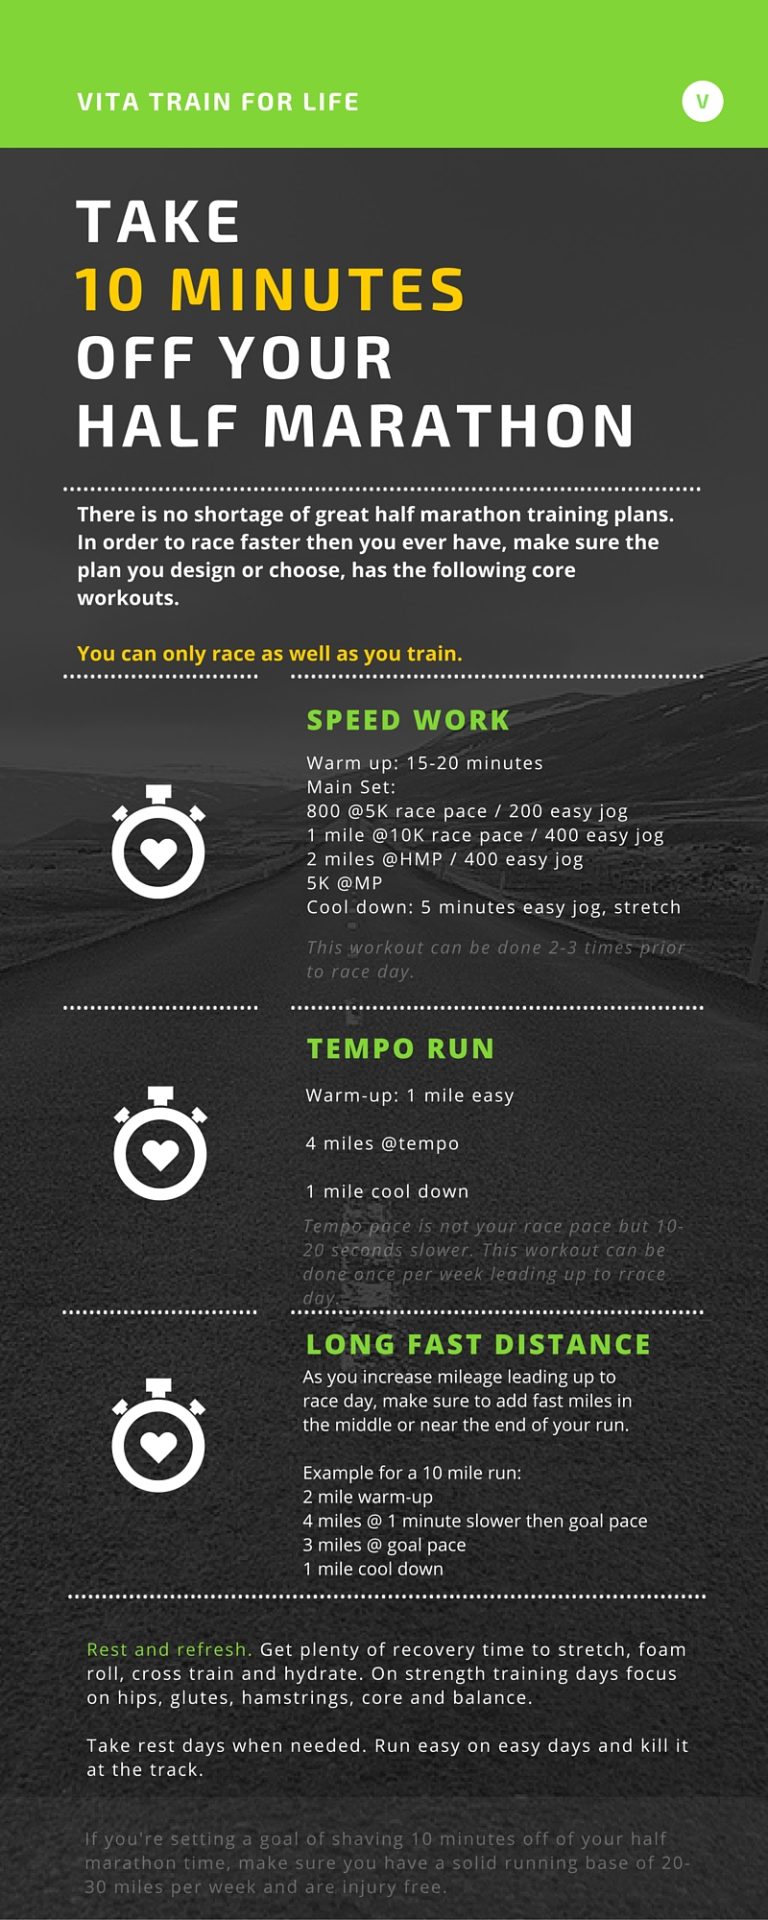 How to Improve Marathon Time